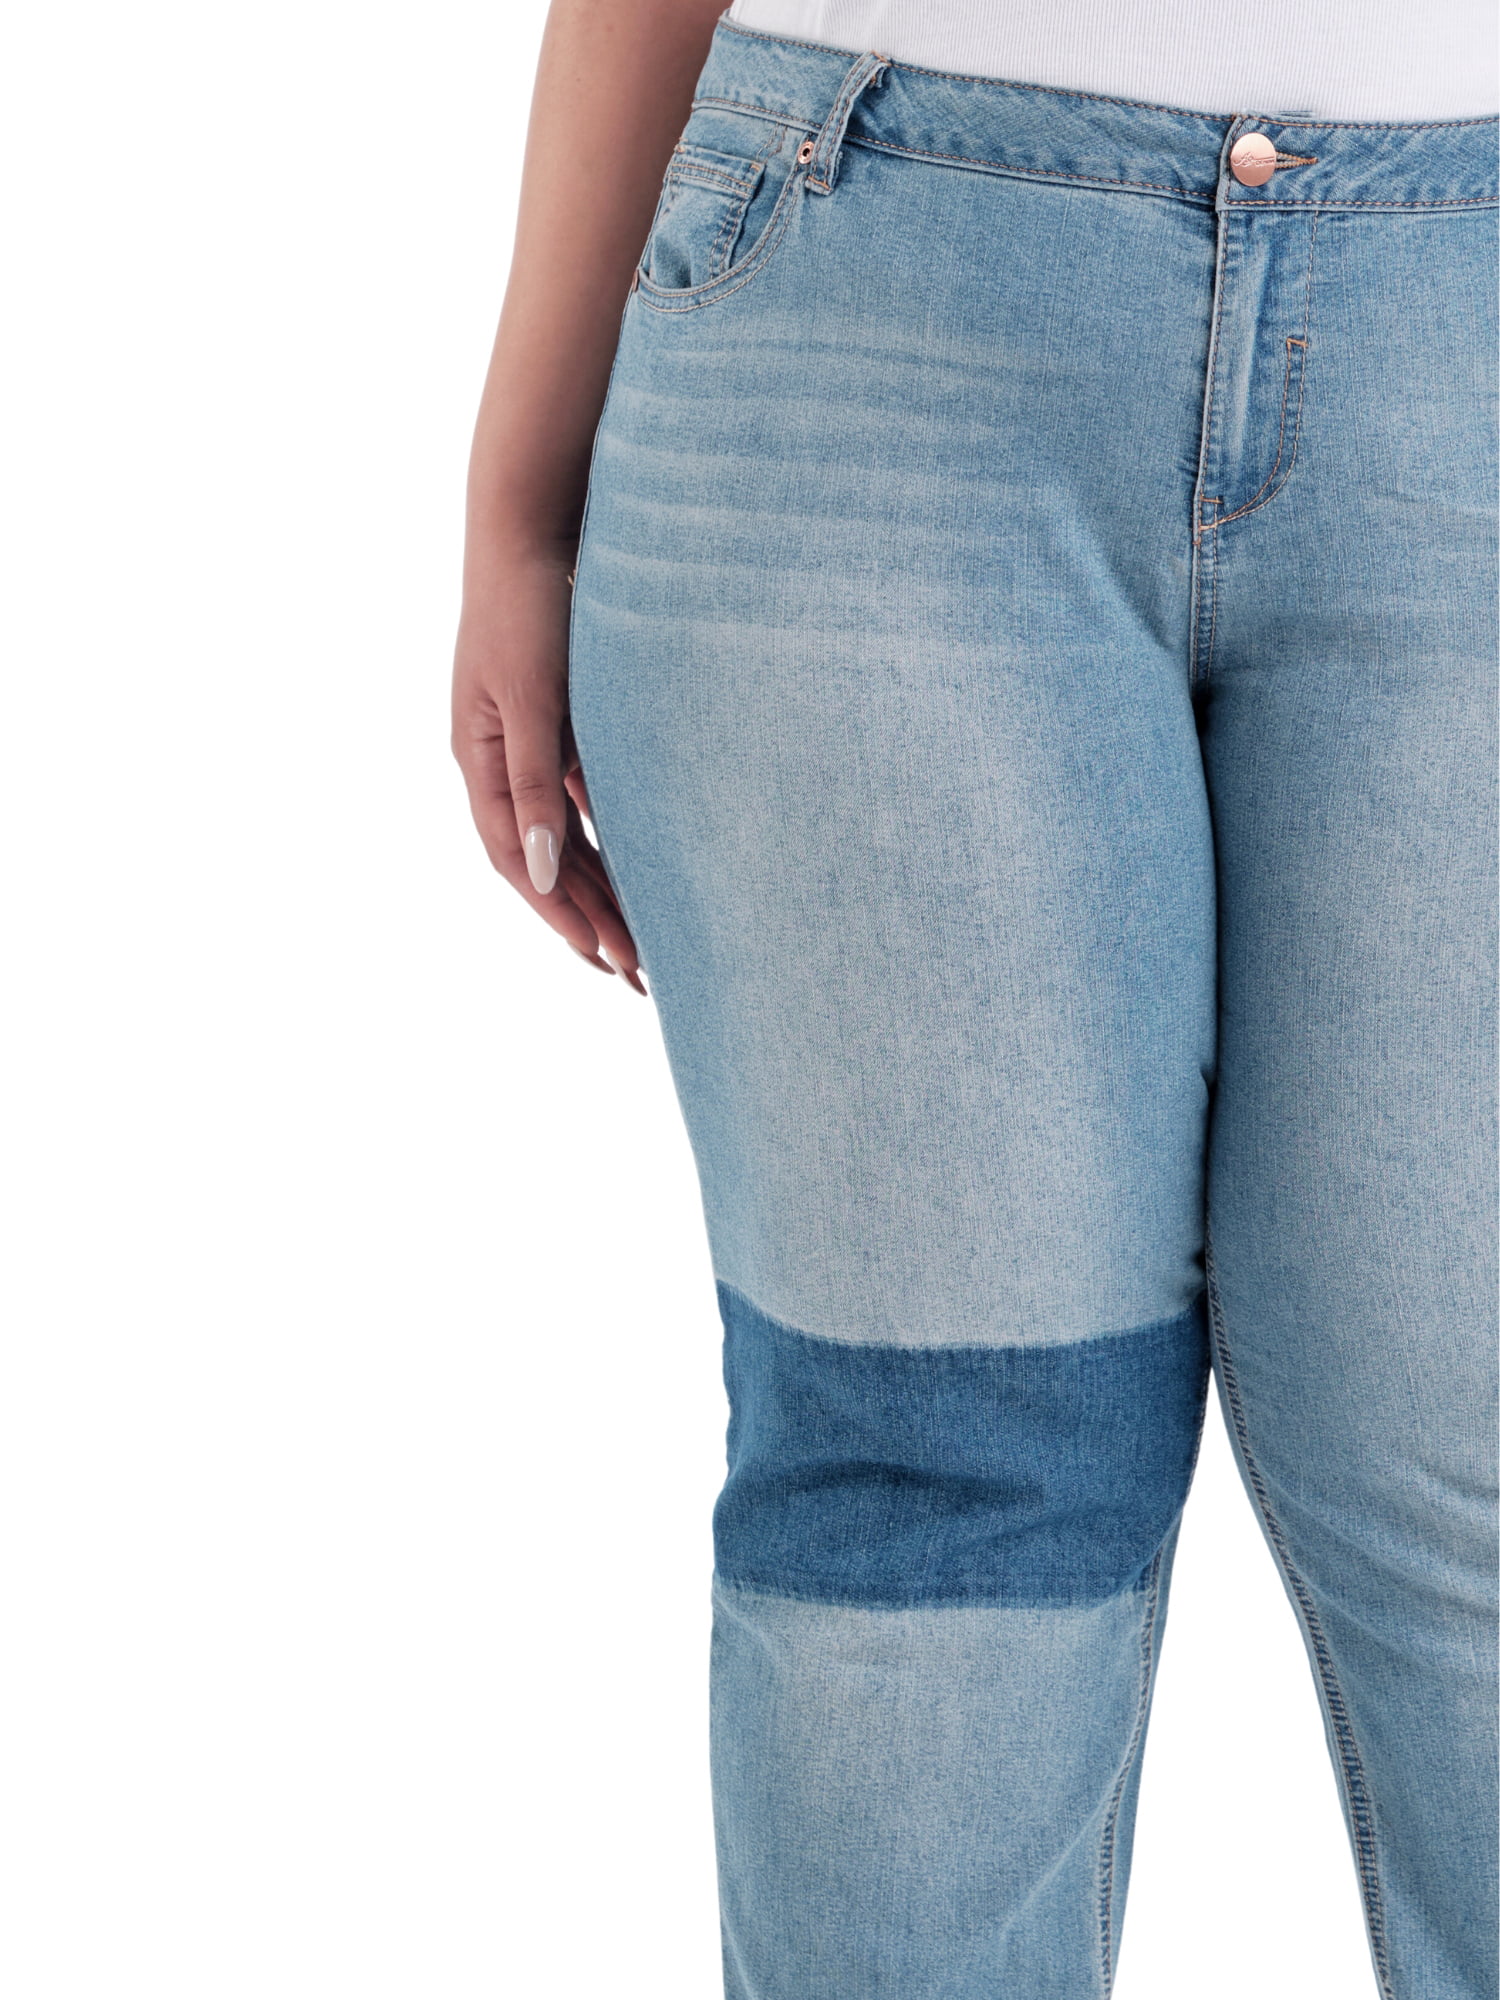 A3 Denim Women's Plus Size Patchwork Boyfriend Jeans